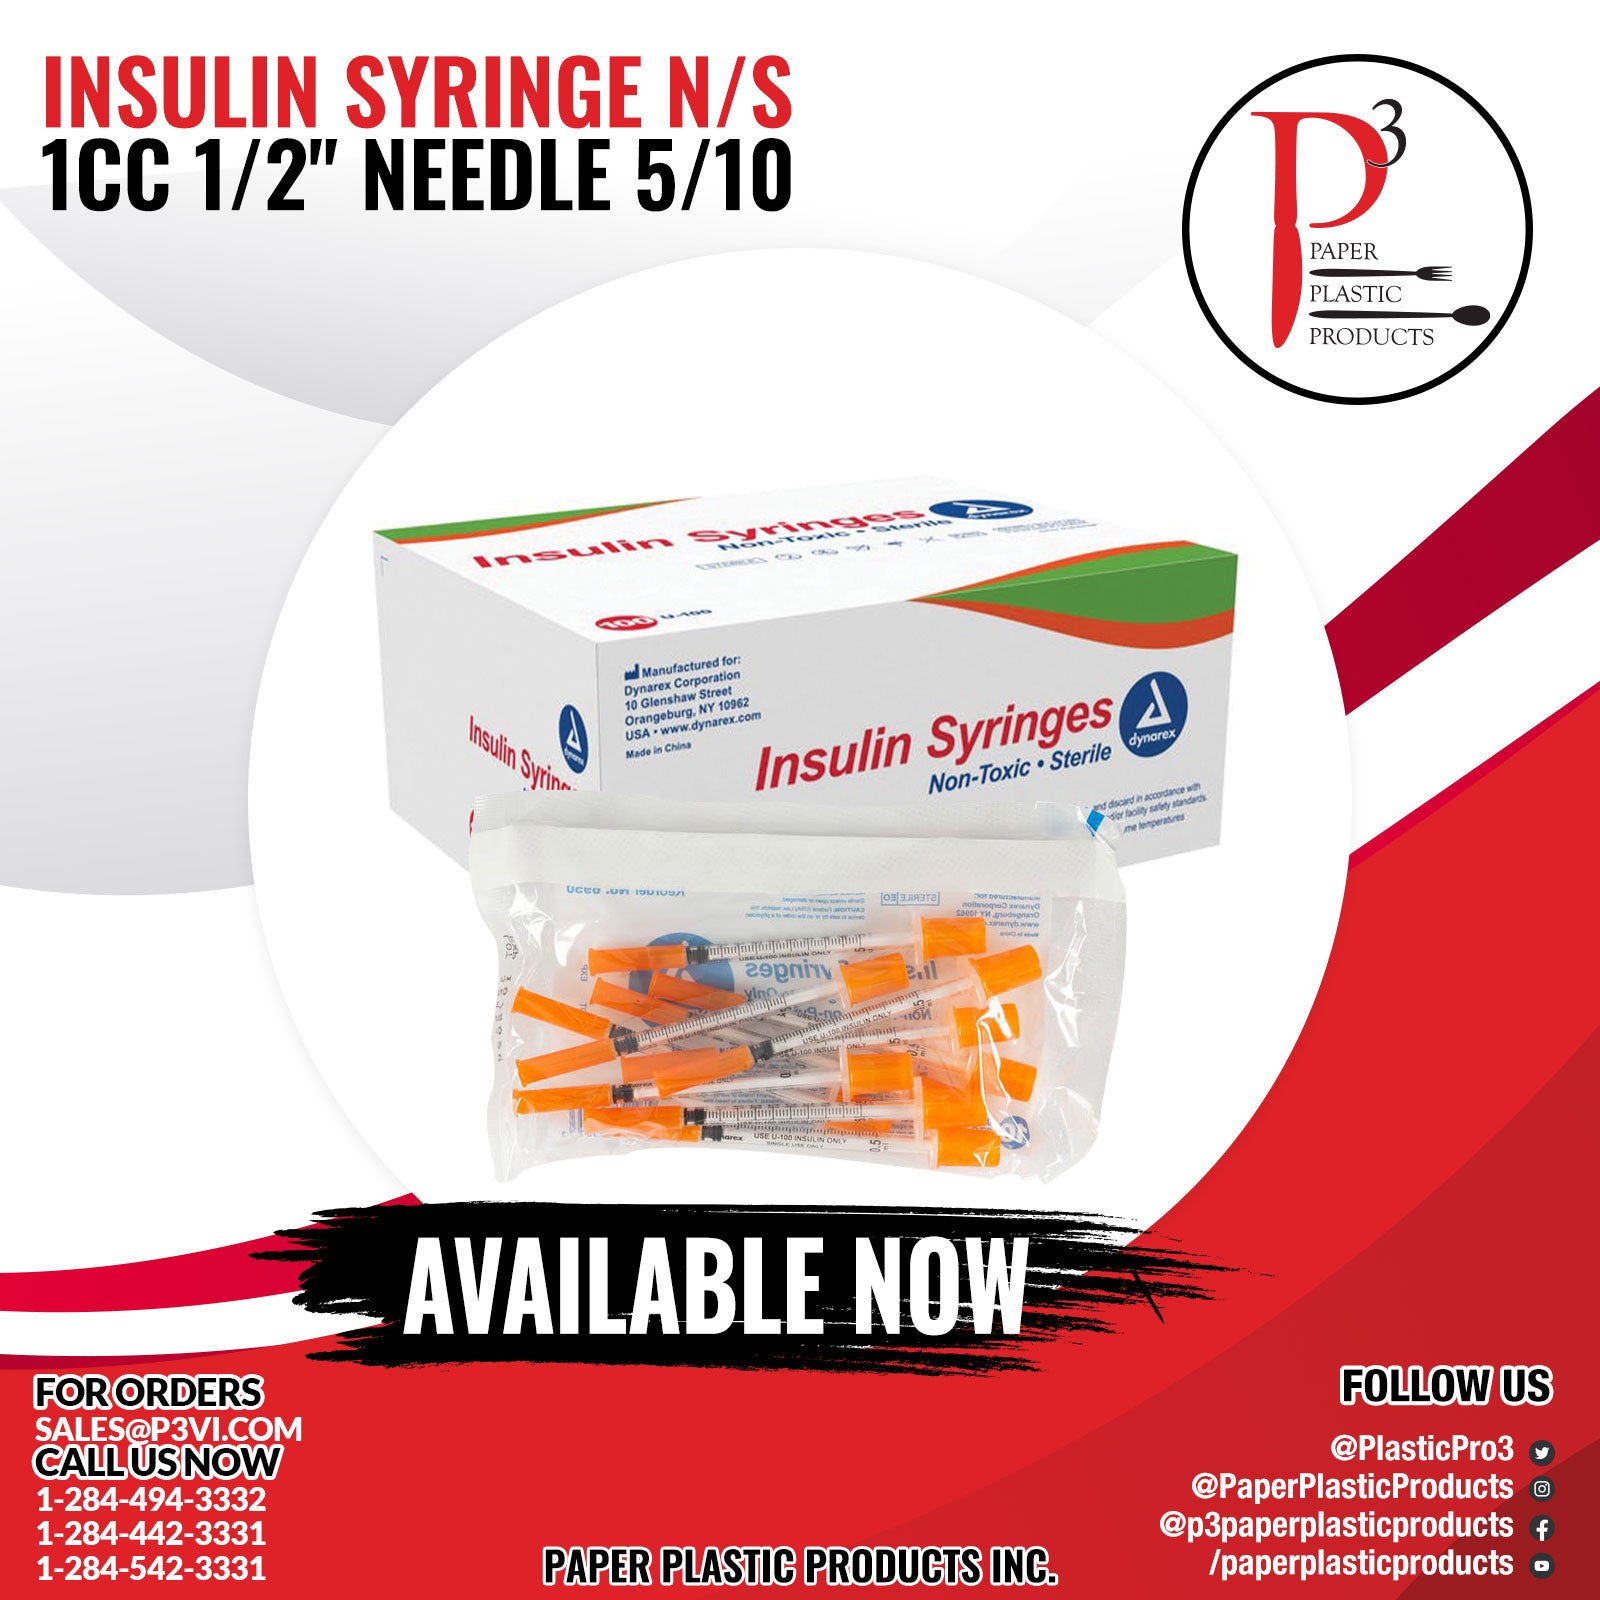 Insulin Syringe N/S 1cc 1/2" needle 5/10/10